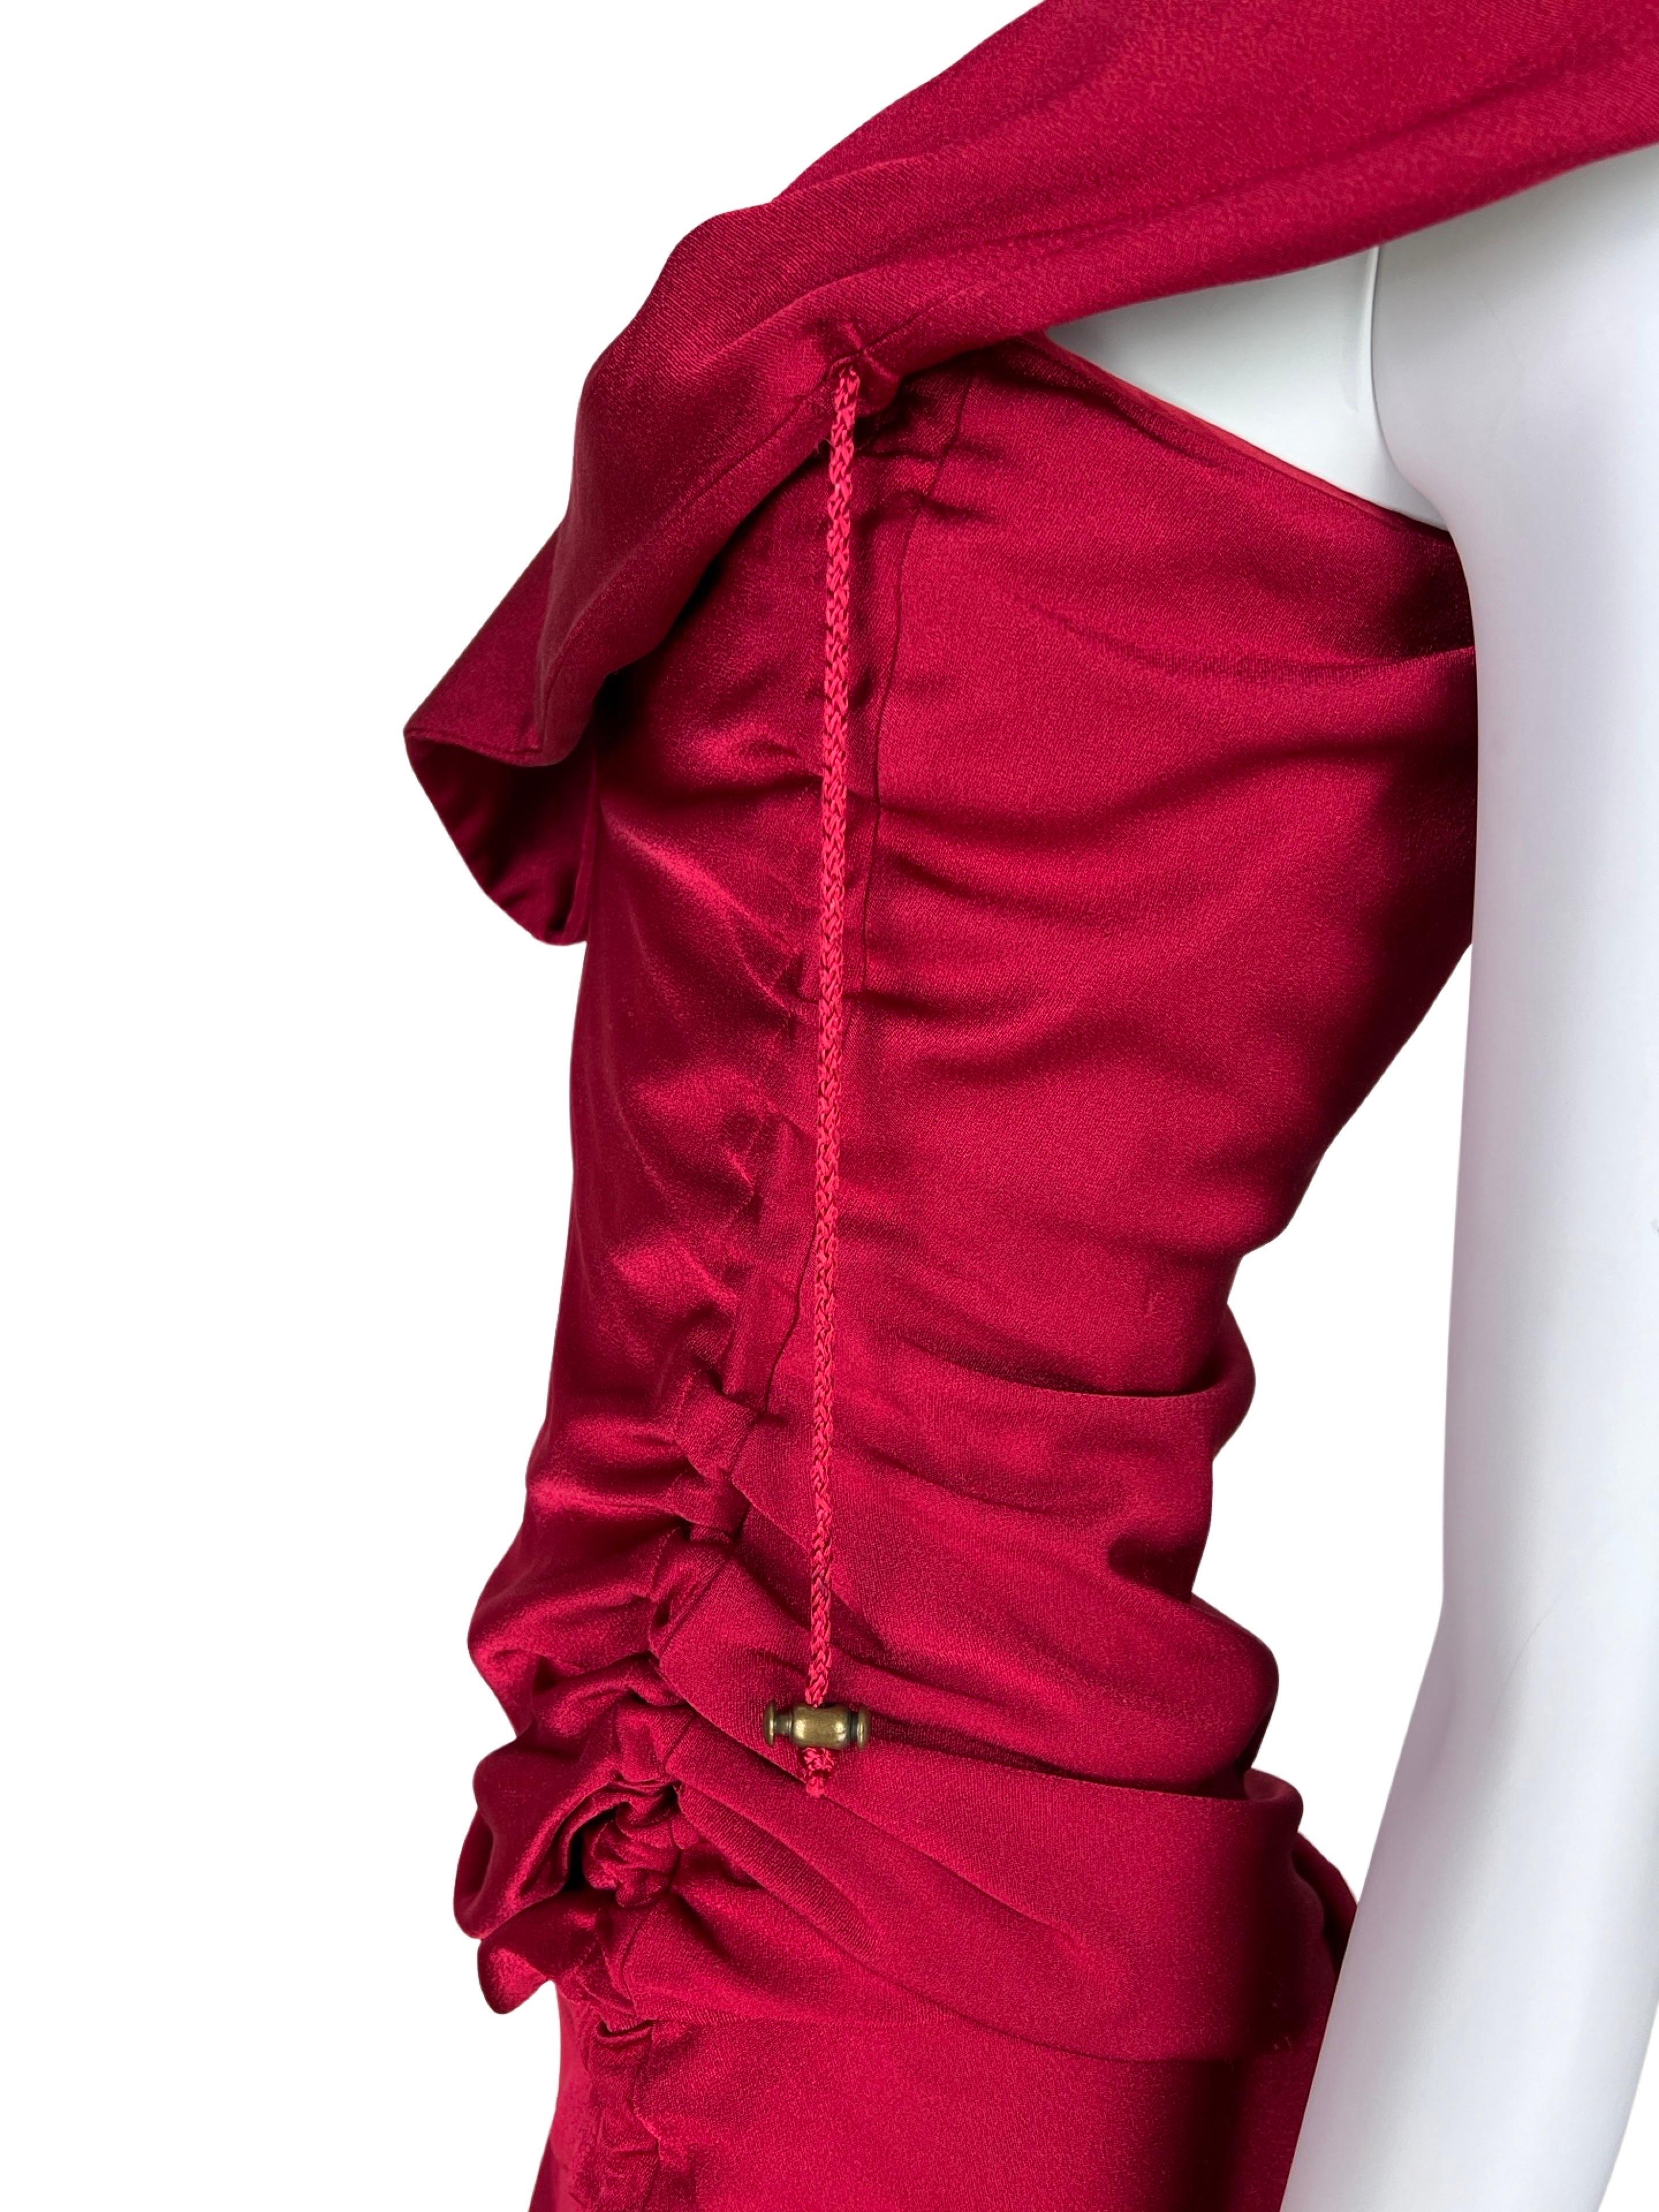 John Galliano Fall 2002 Red Draped Dress For Sale 6